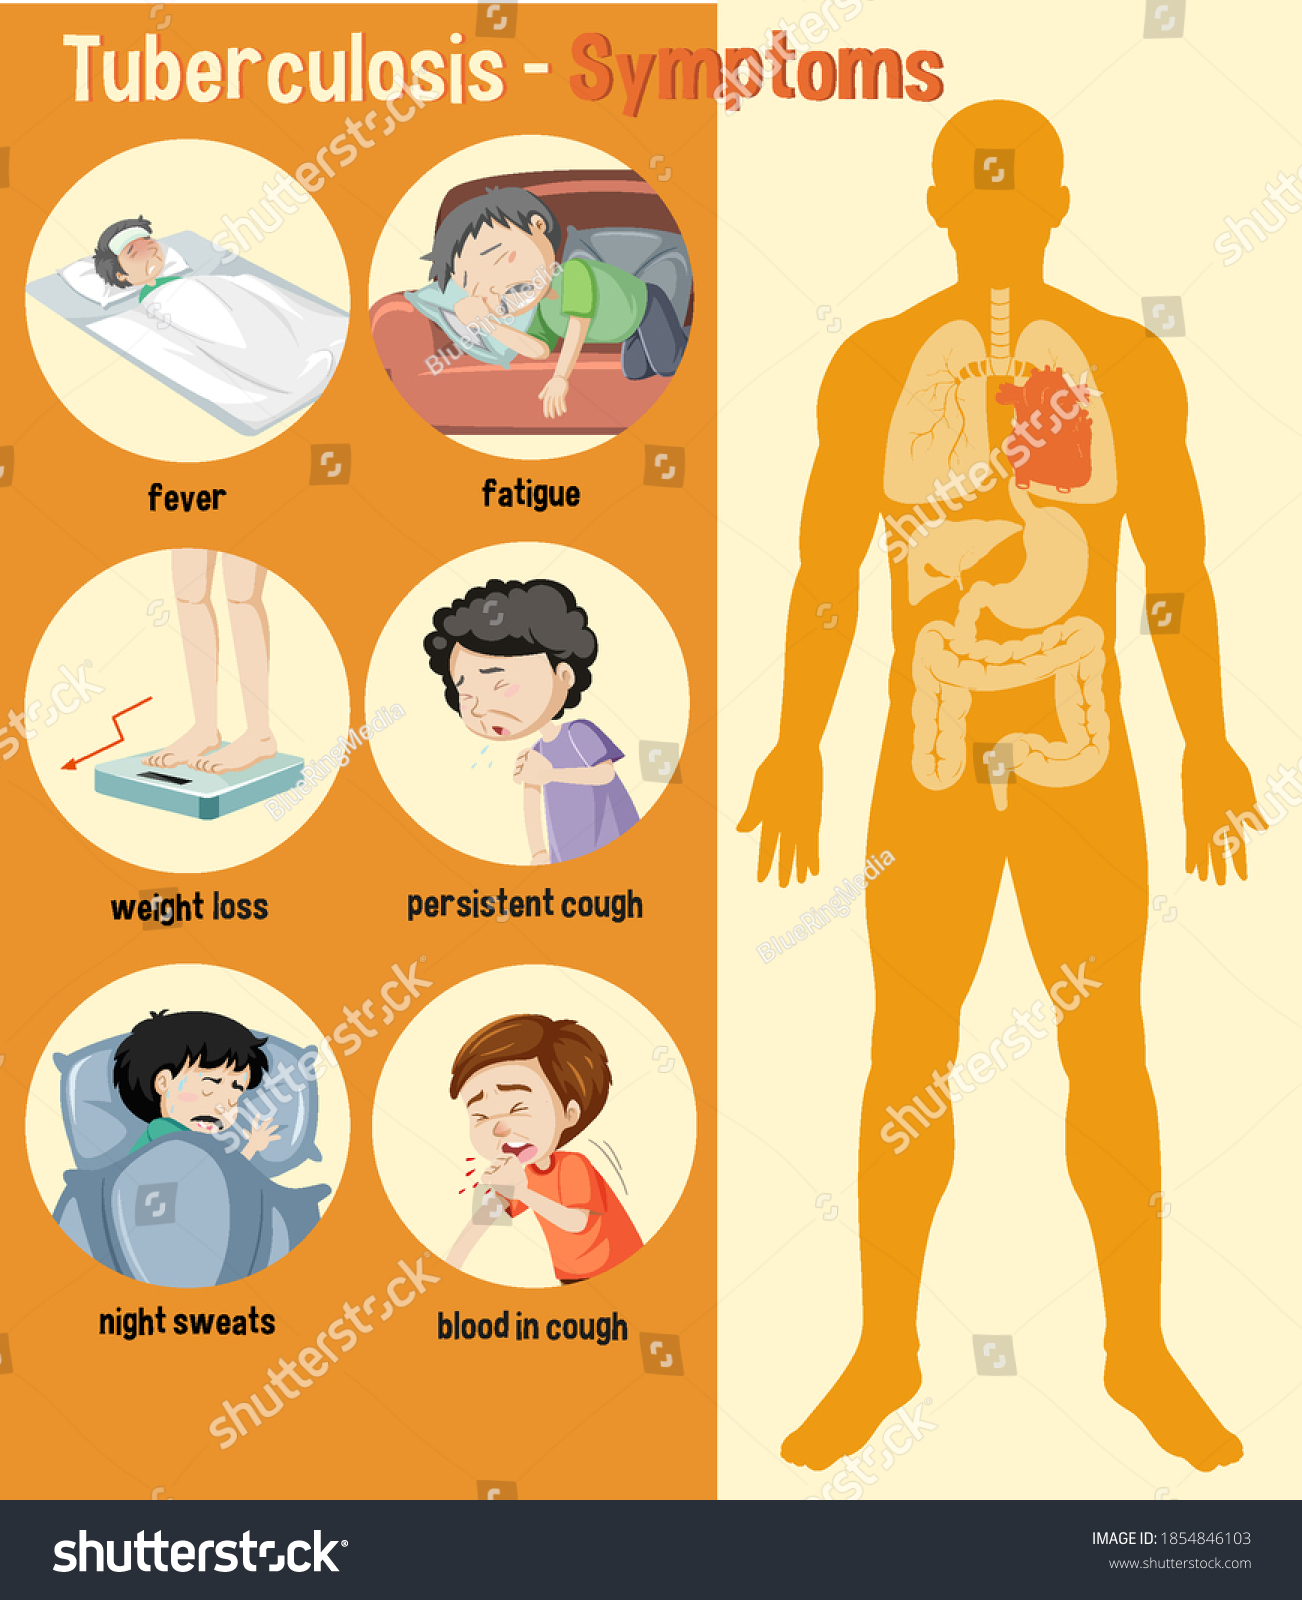 Tuberculosis Symptoms Information Infographic Illustration เวกเตอร์